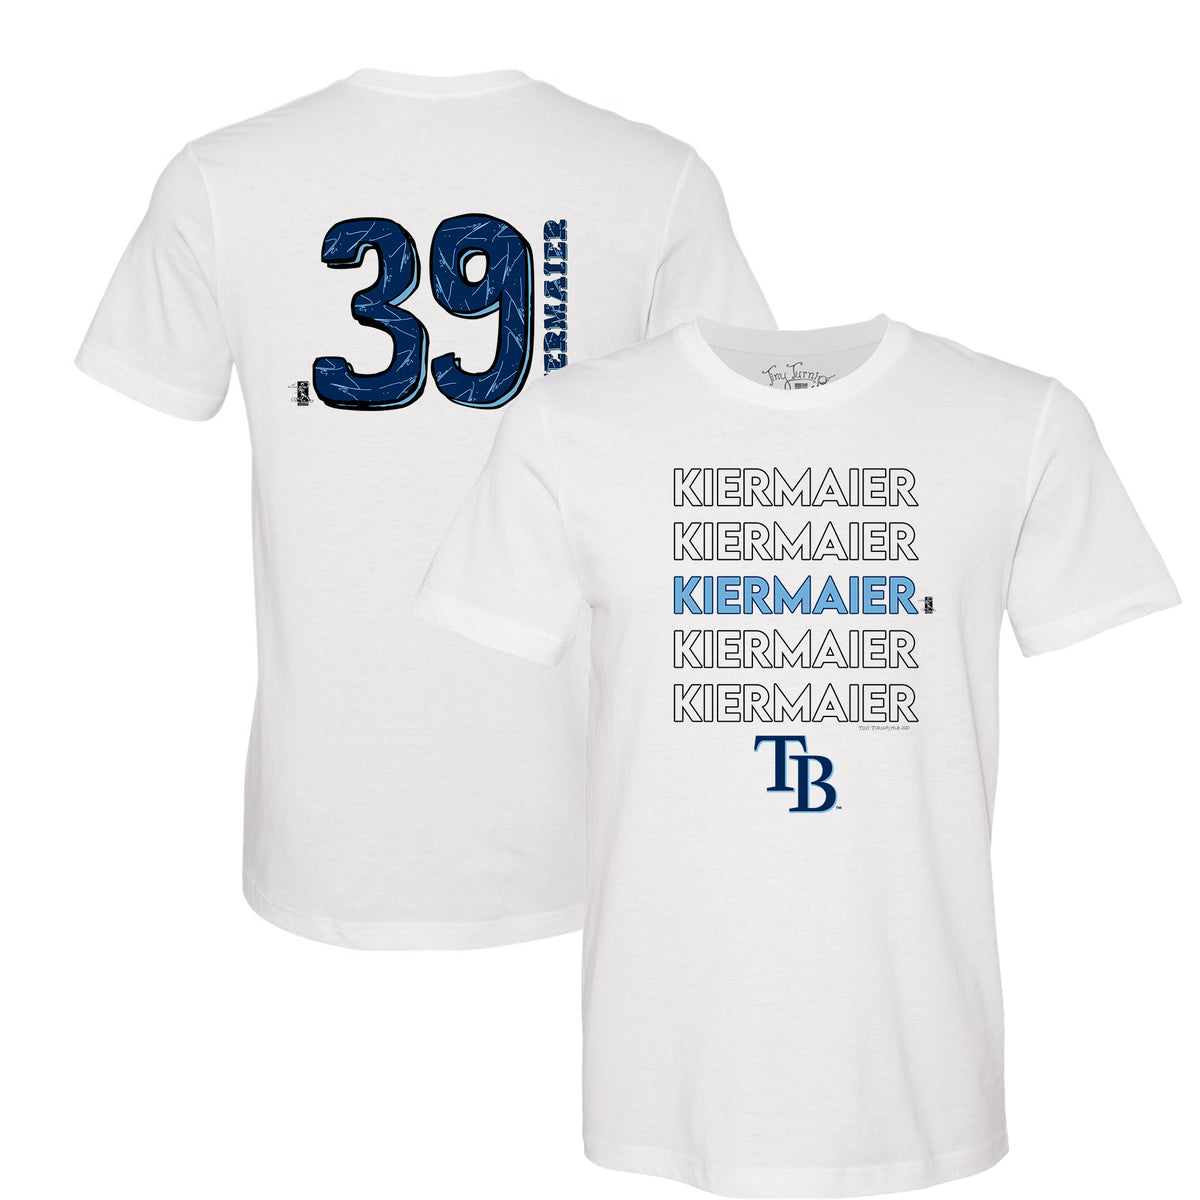 Kansas City Royals MLB Women's Plus Size Graphic T-Shirt